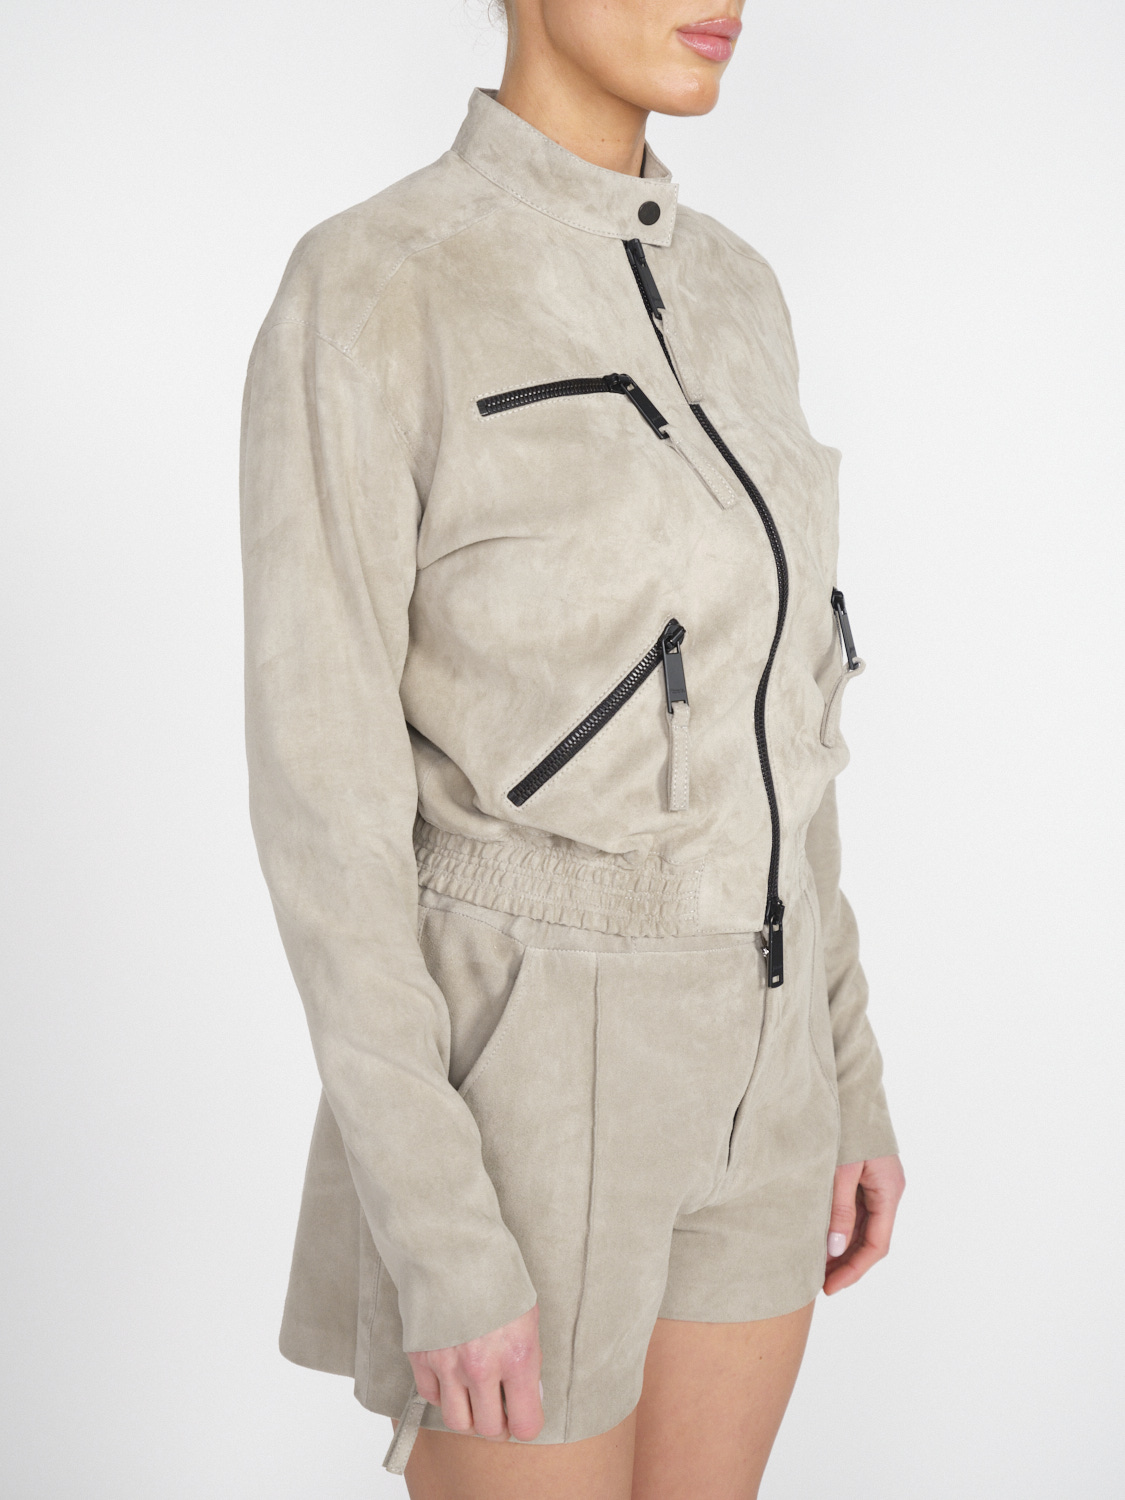 jitrois Blof - Stretchy suede jacket with black zip-details  beige 36